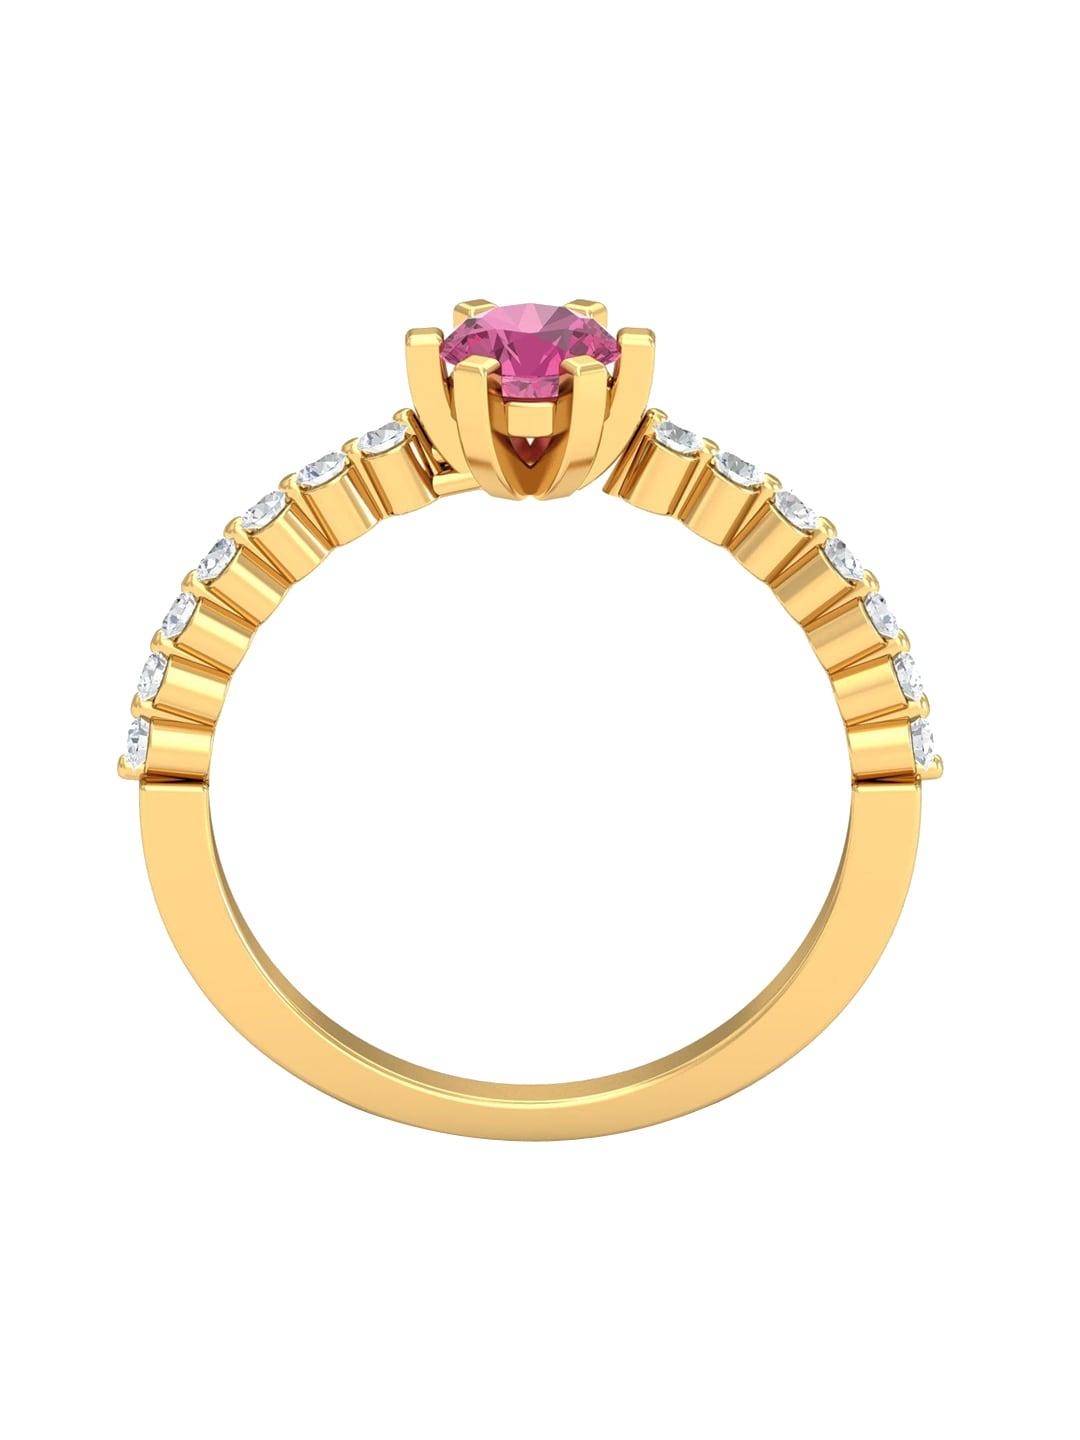 kuberbox 18kt gold entangled sapphire diamond-studded ring- 2.88 gm